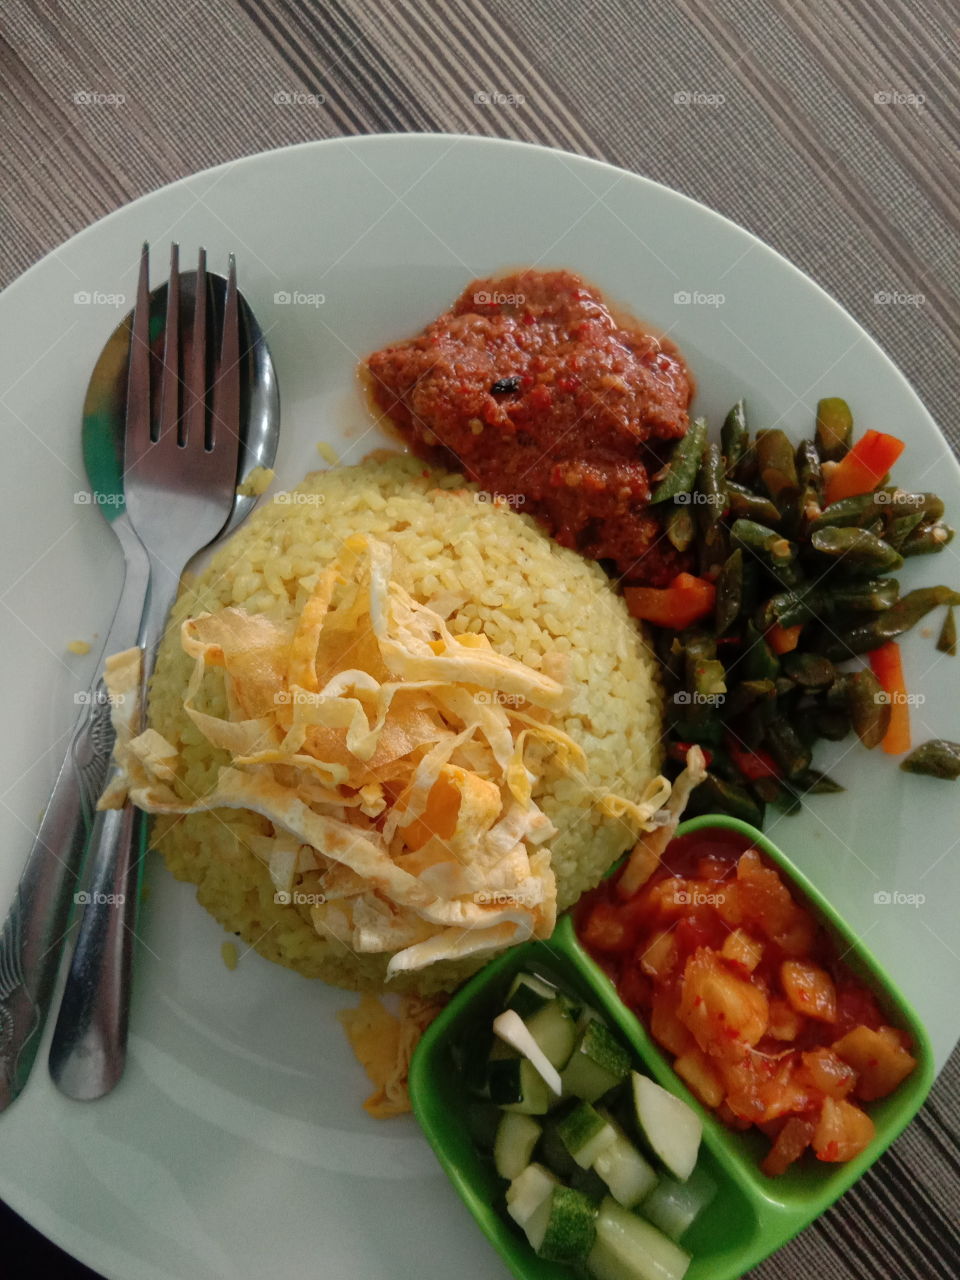 nasi minyak makanan khas palembang, indonesian food